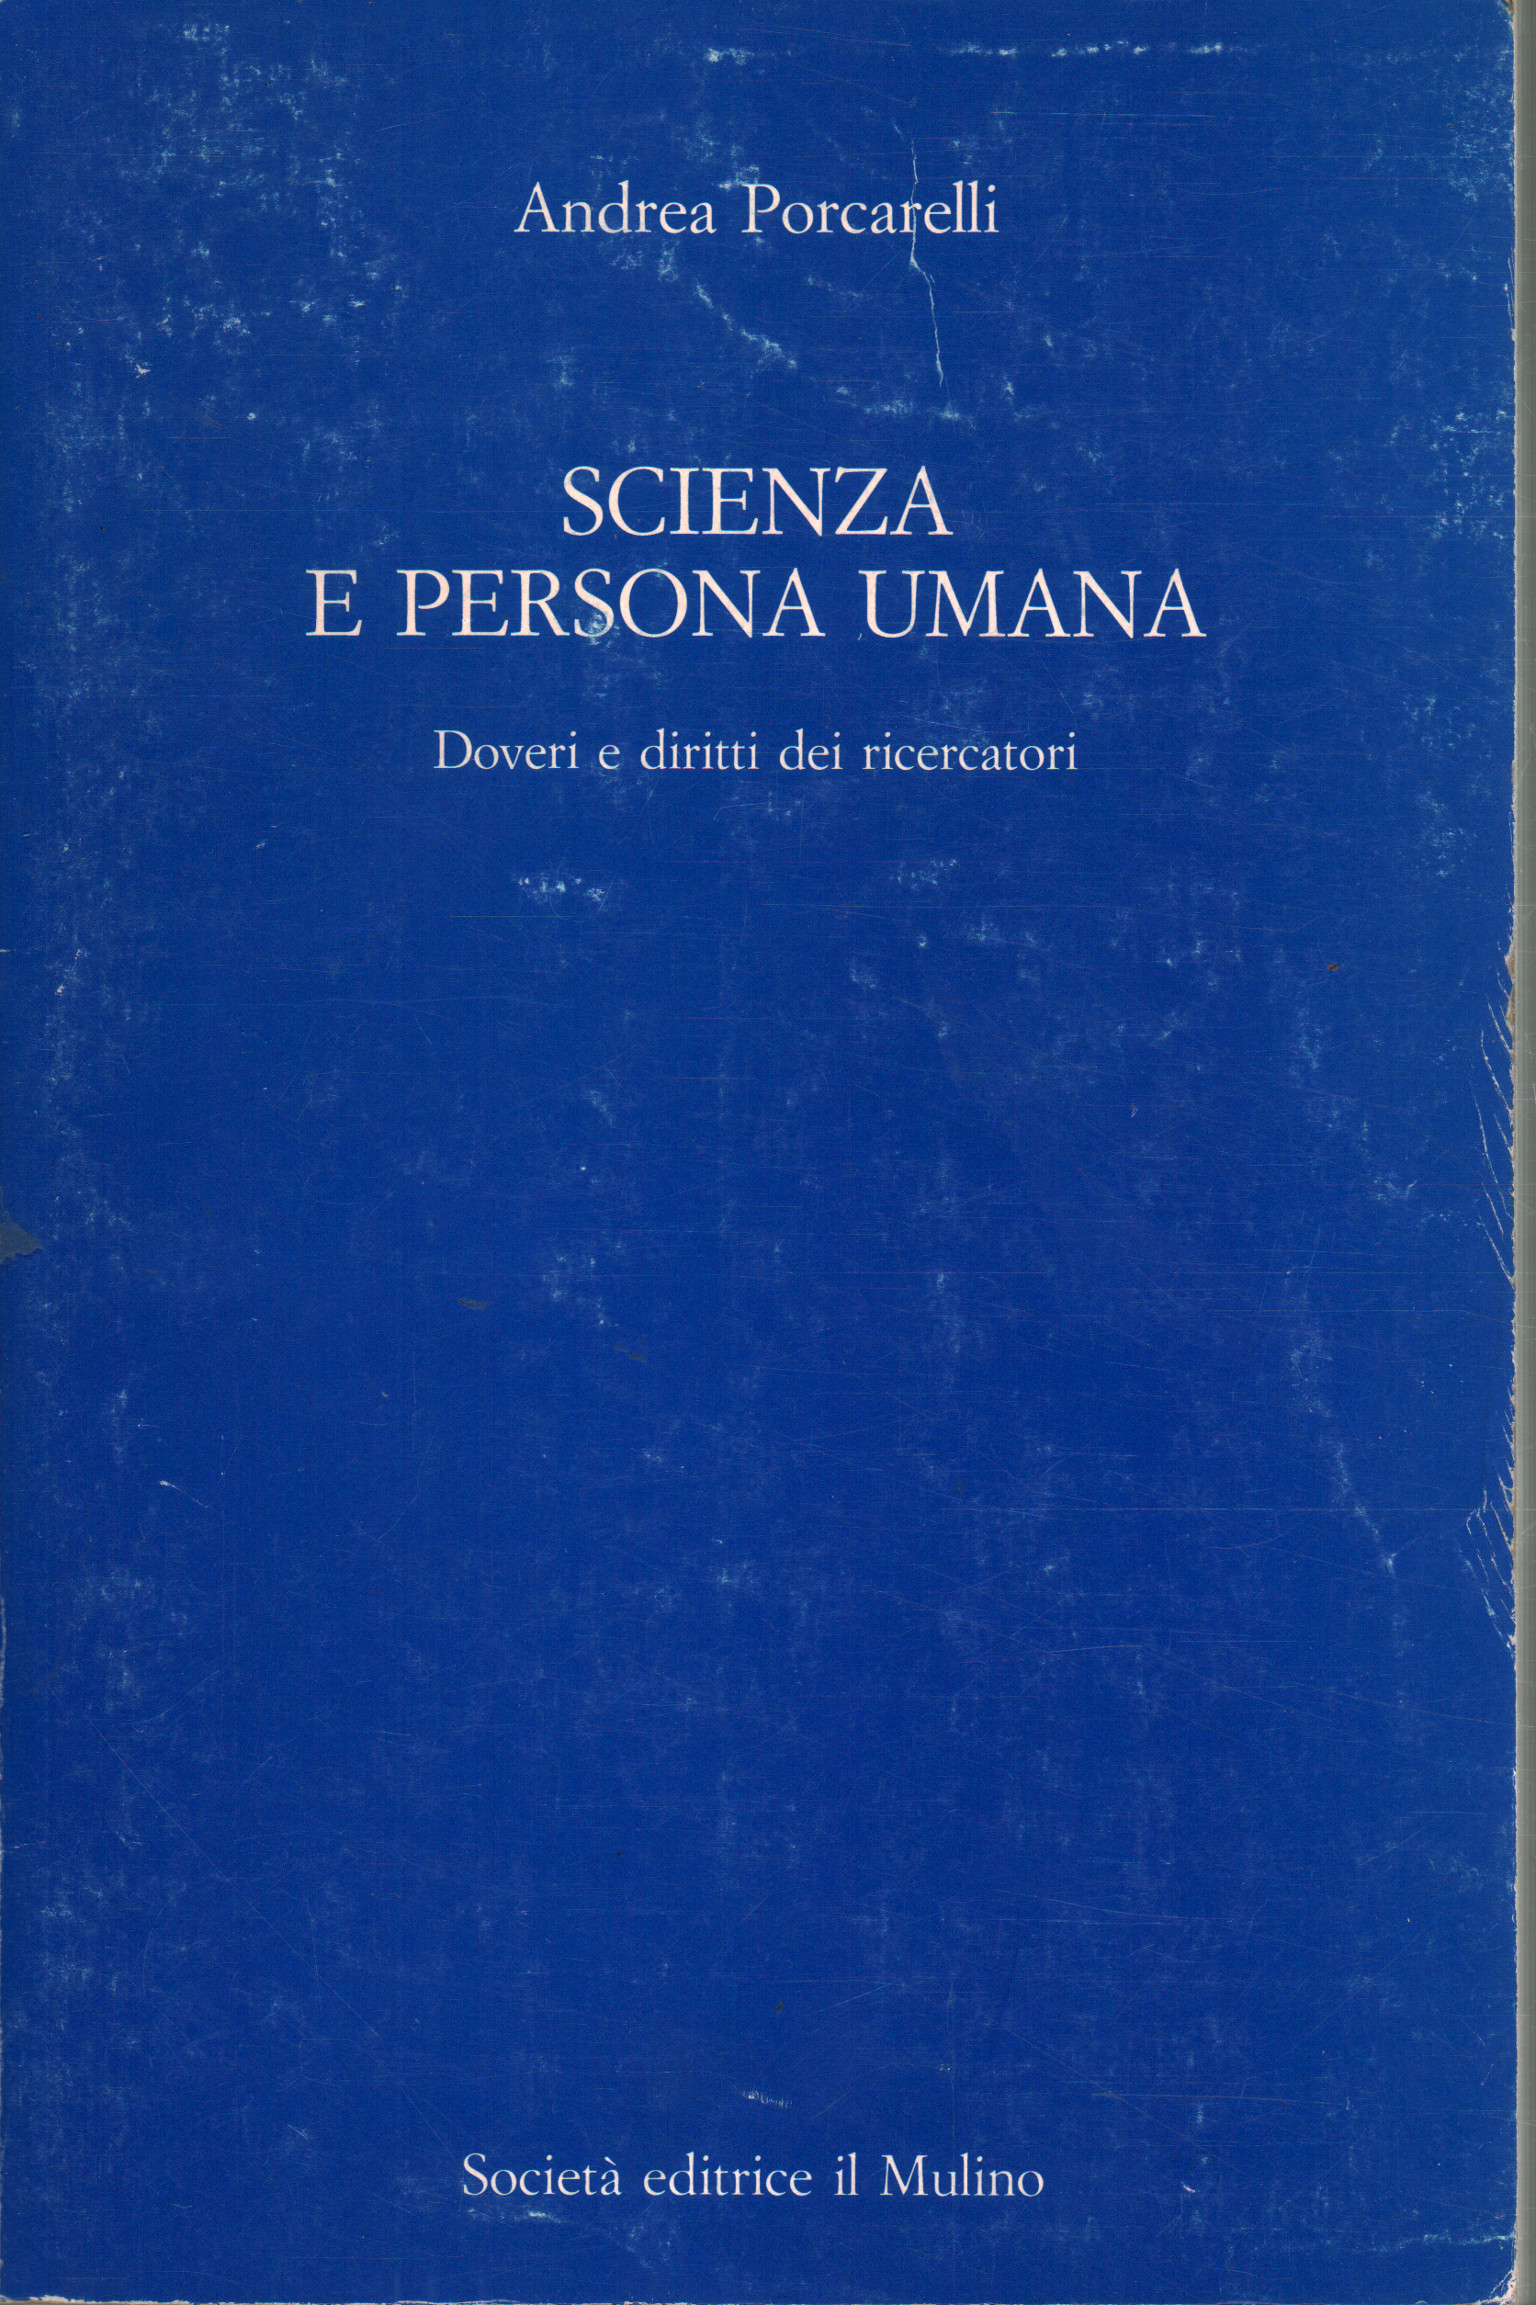 Scienza e persona umana, Andrea Porcarelli